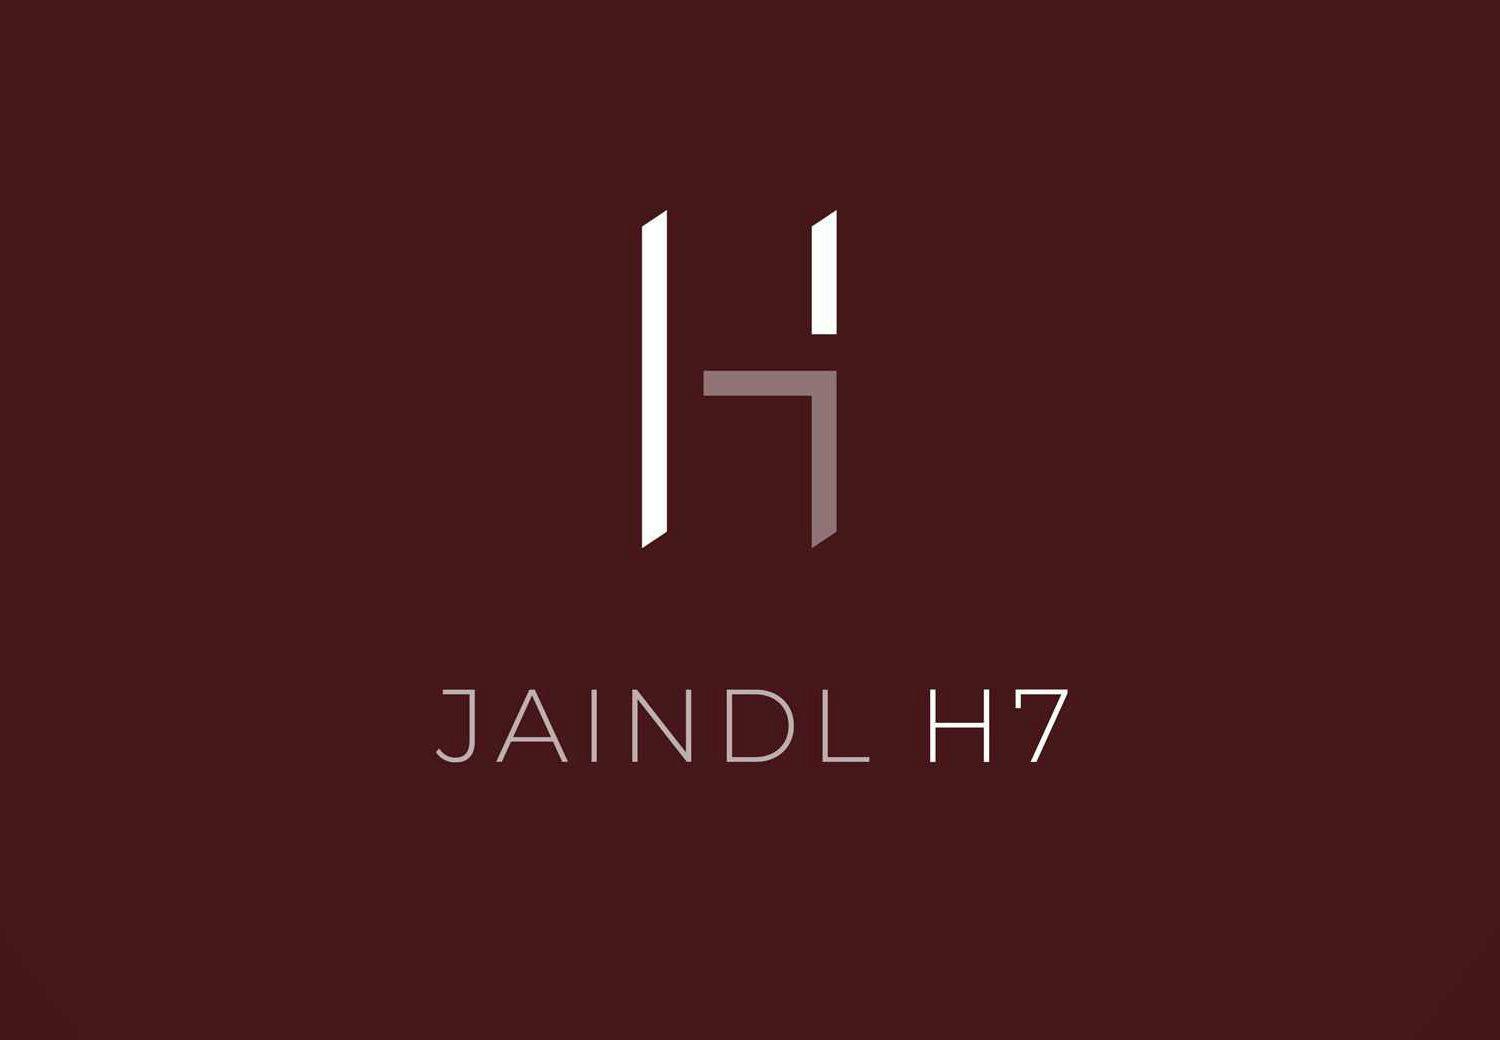 Award-winning logo design for Jaindl H7